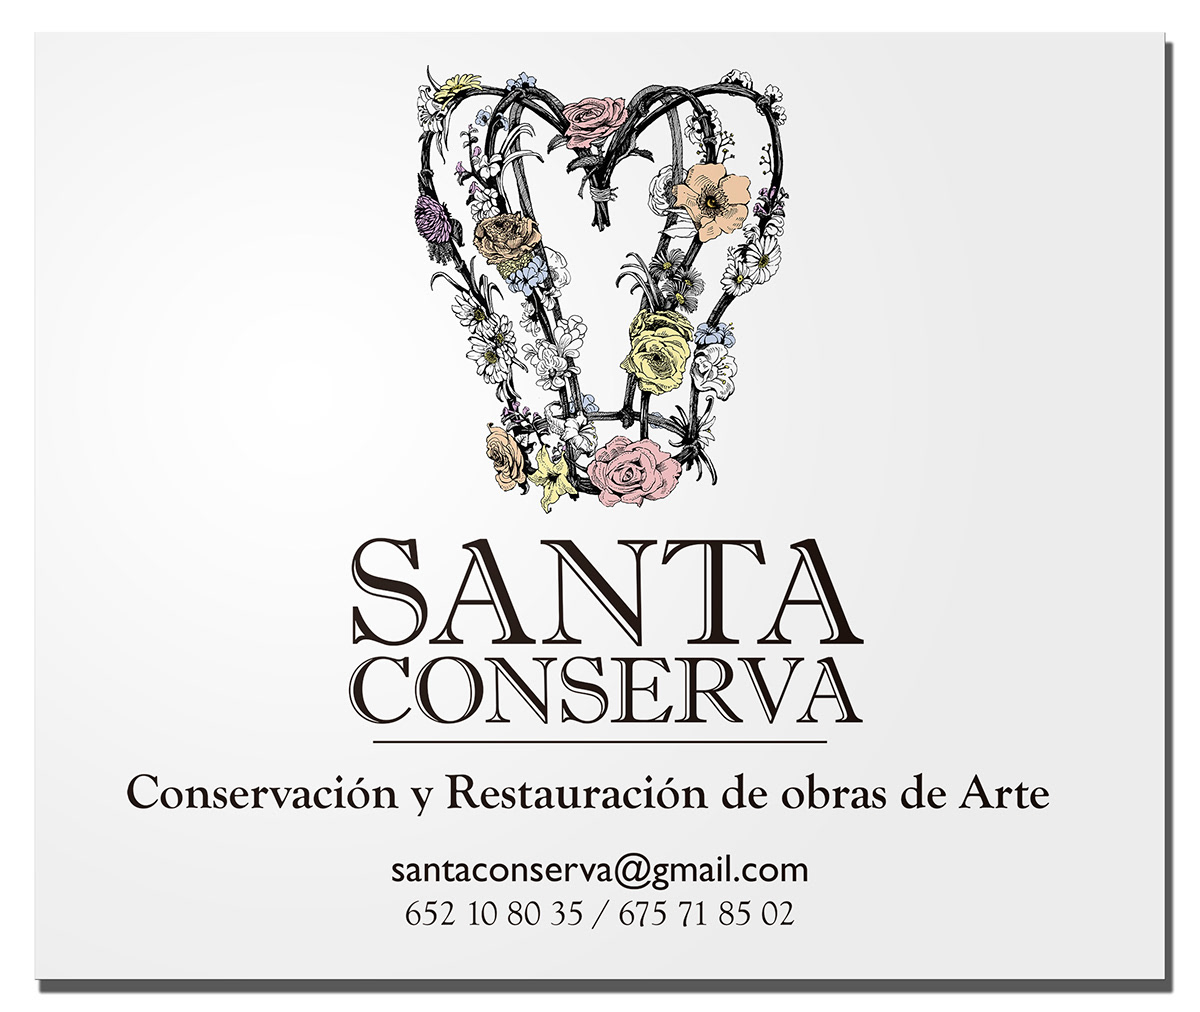 santa conserva conservation restoration business card sign poster print